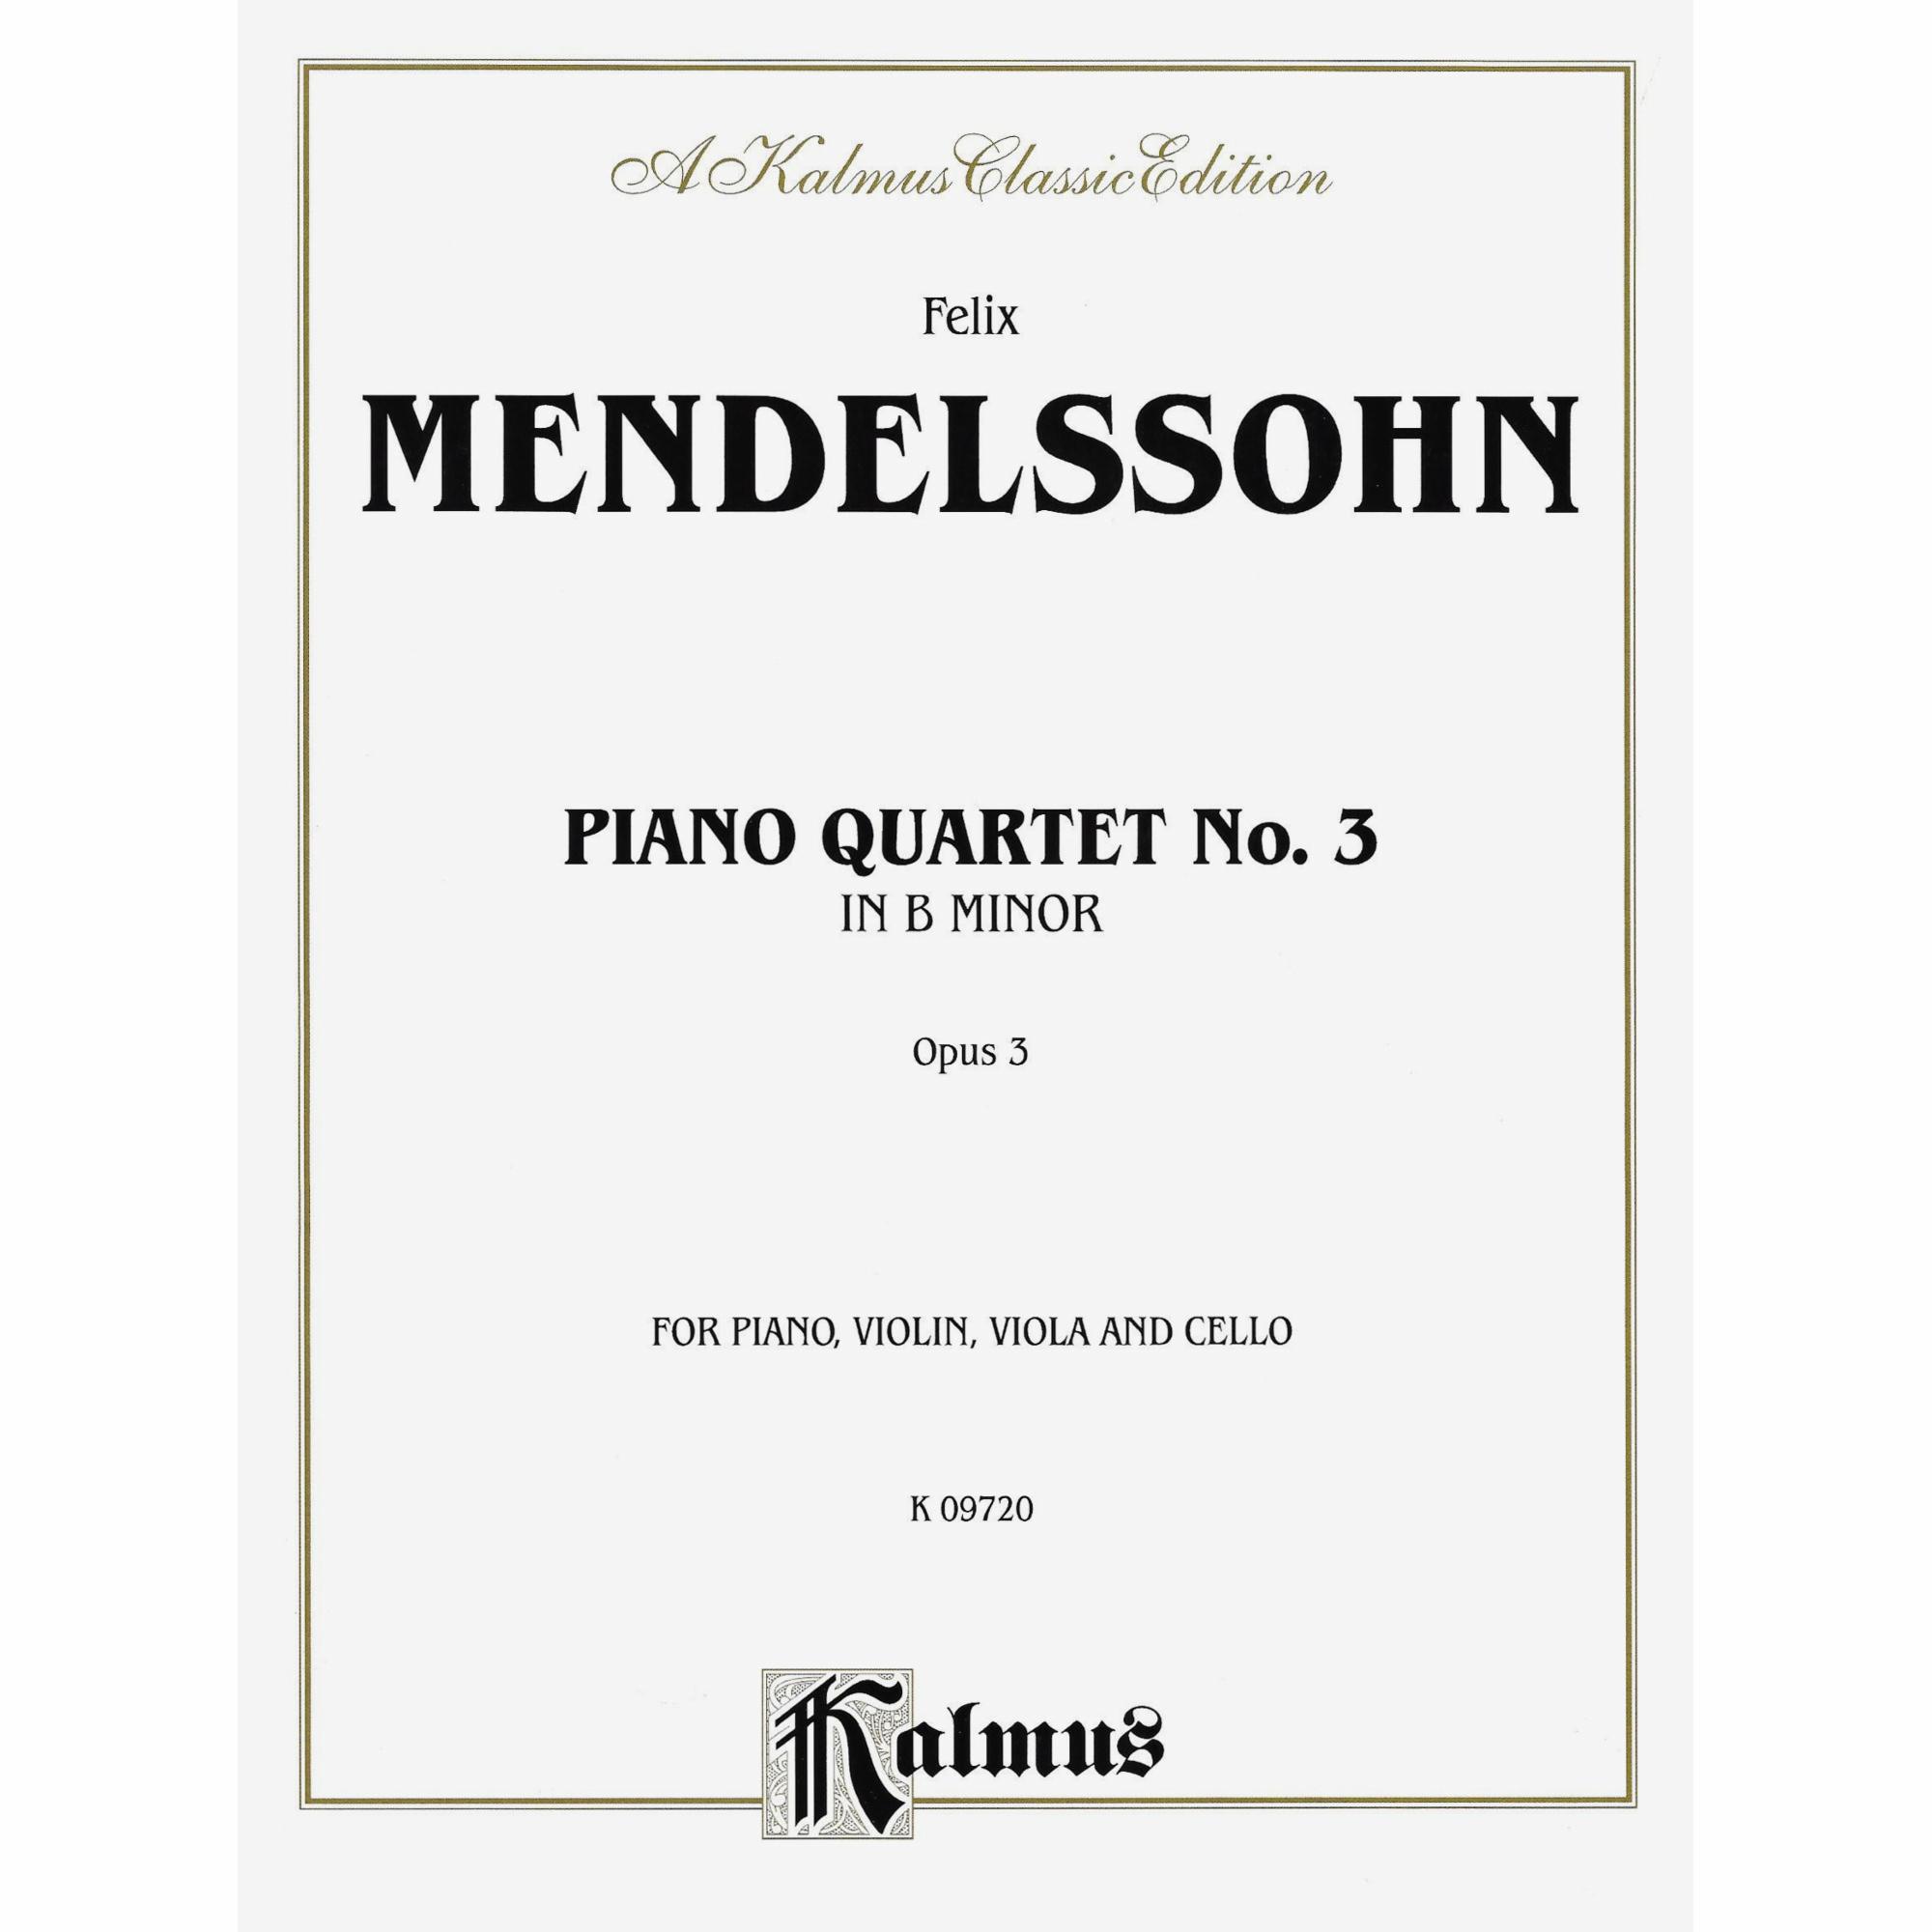 Mendelssohn -- Piano Quartet No. 3 in B Minor, Op. 3